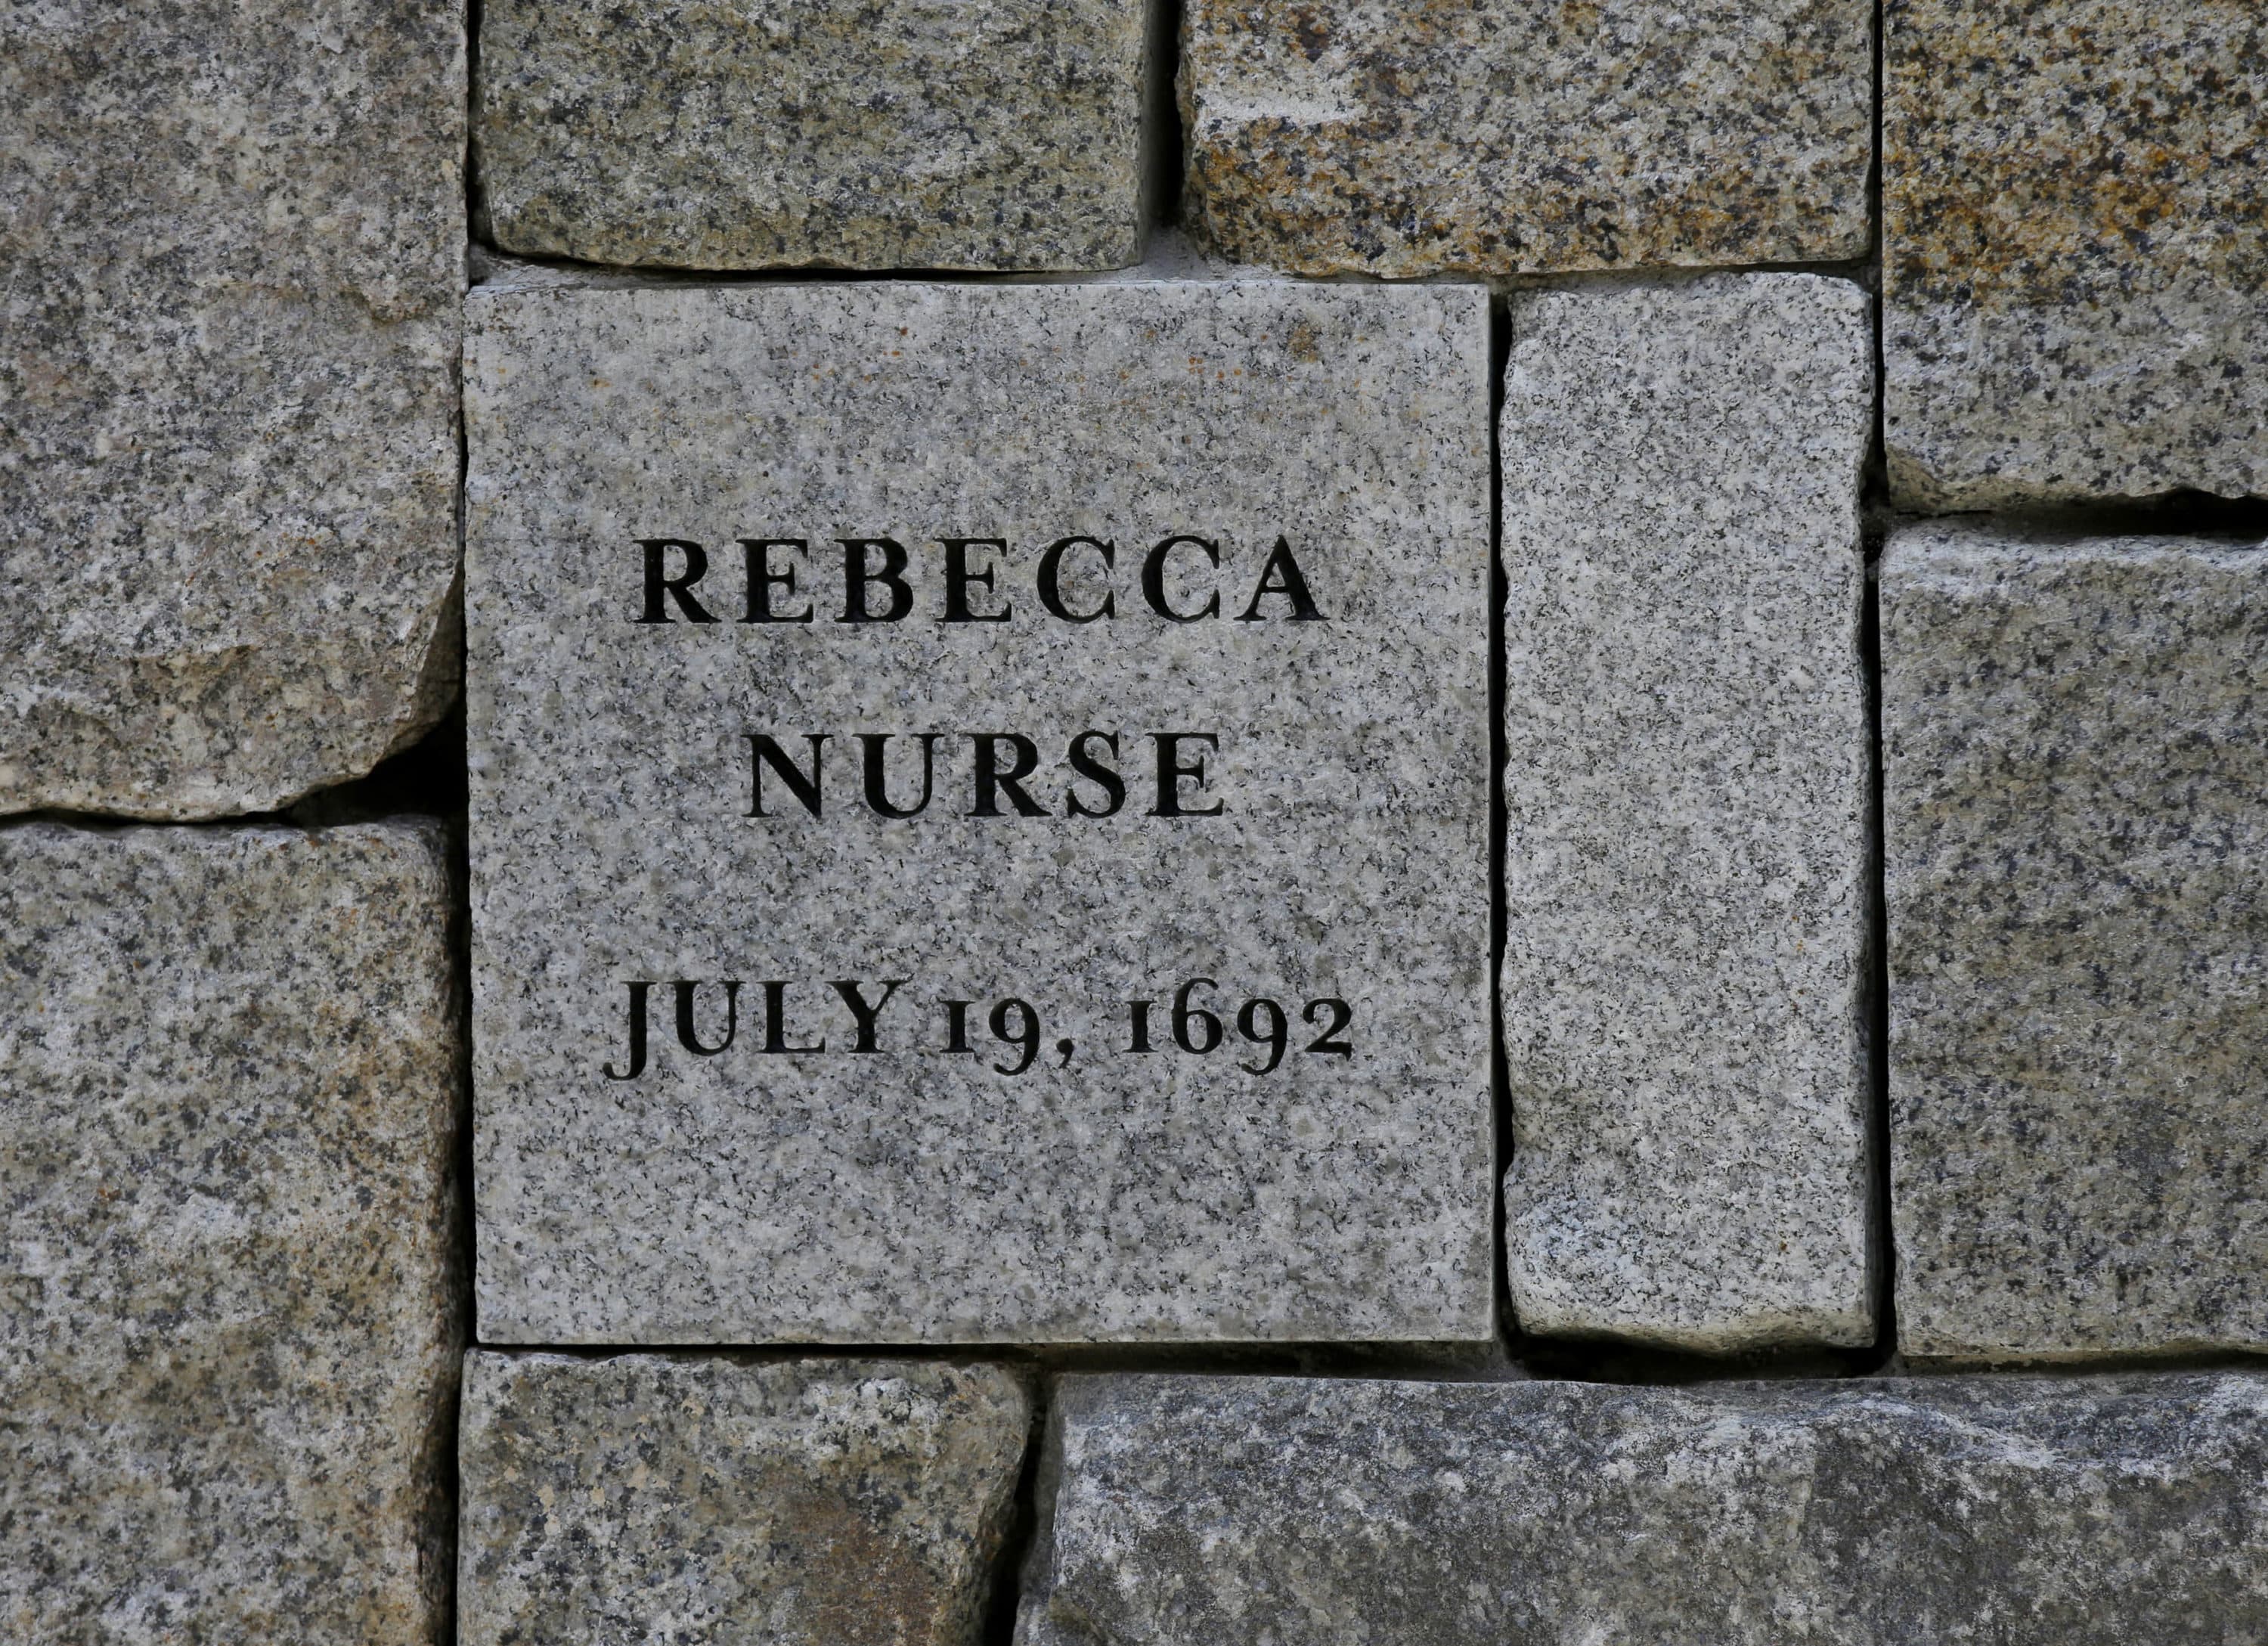 Celebrating The 400th Birthday Of Salem Witch Trials Victim Rebecca Nurse | NCPR News